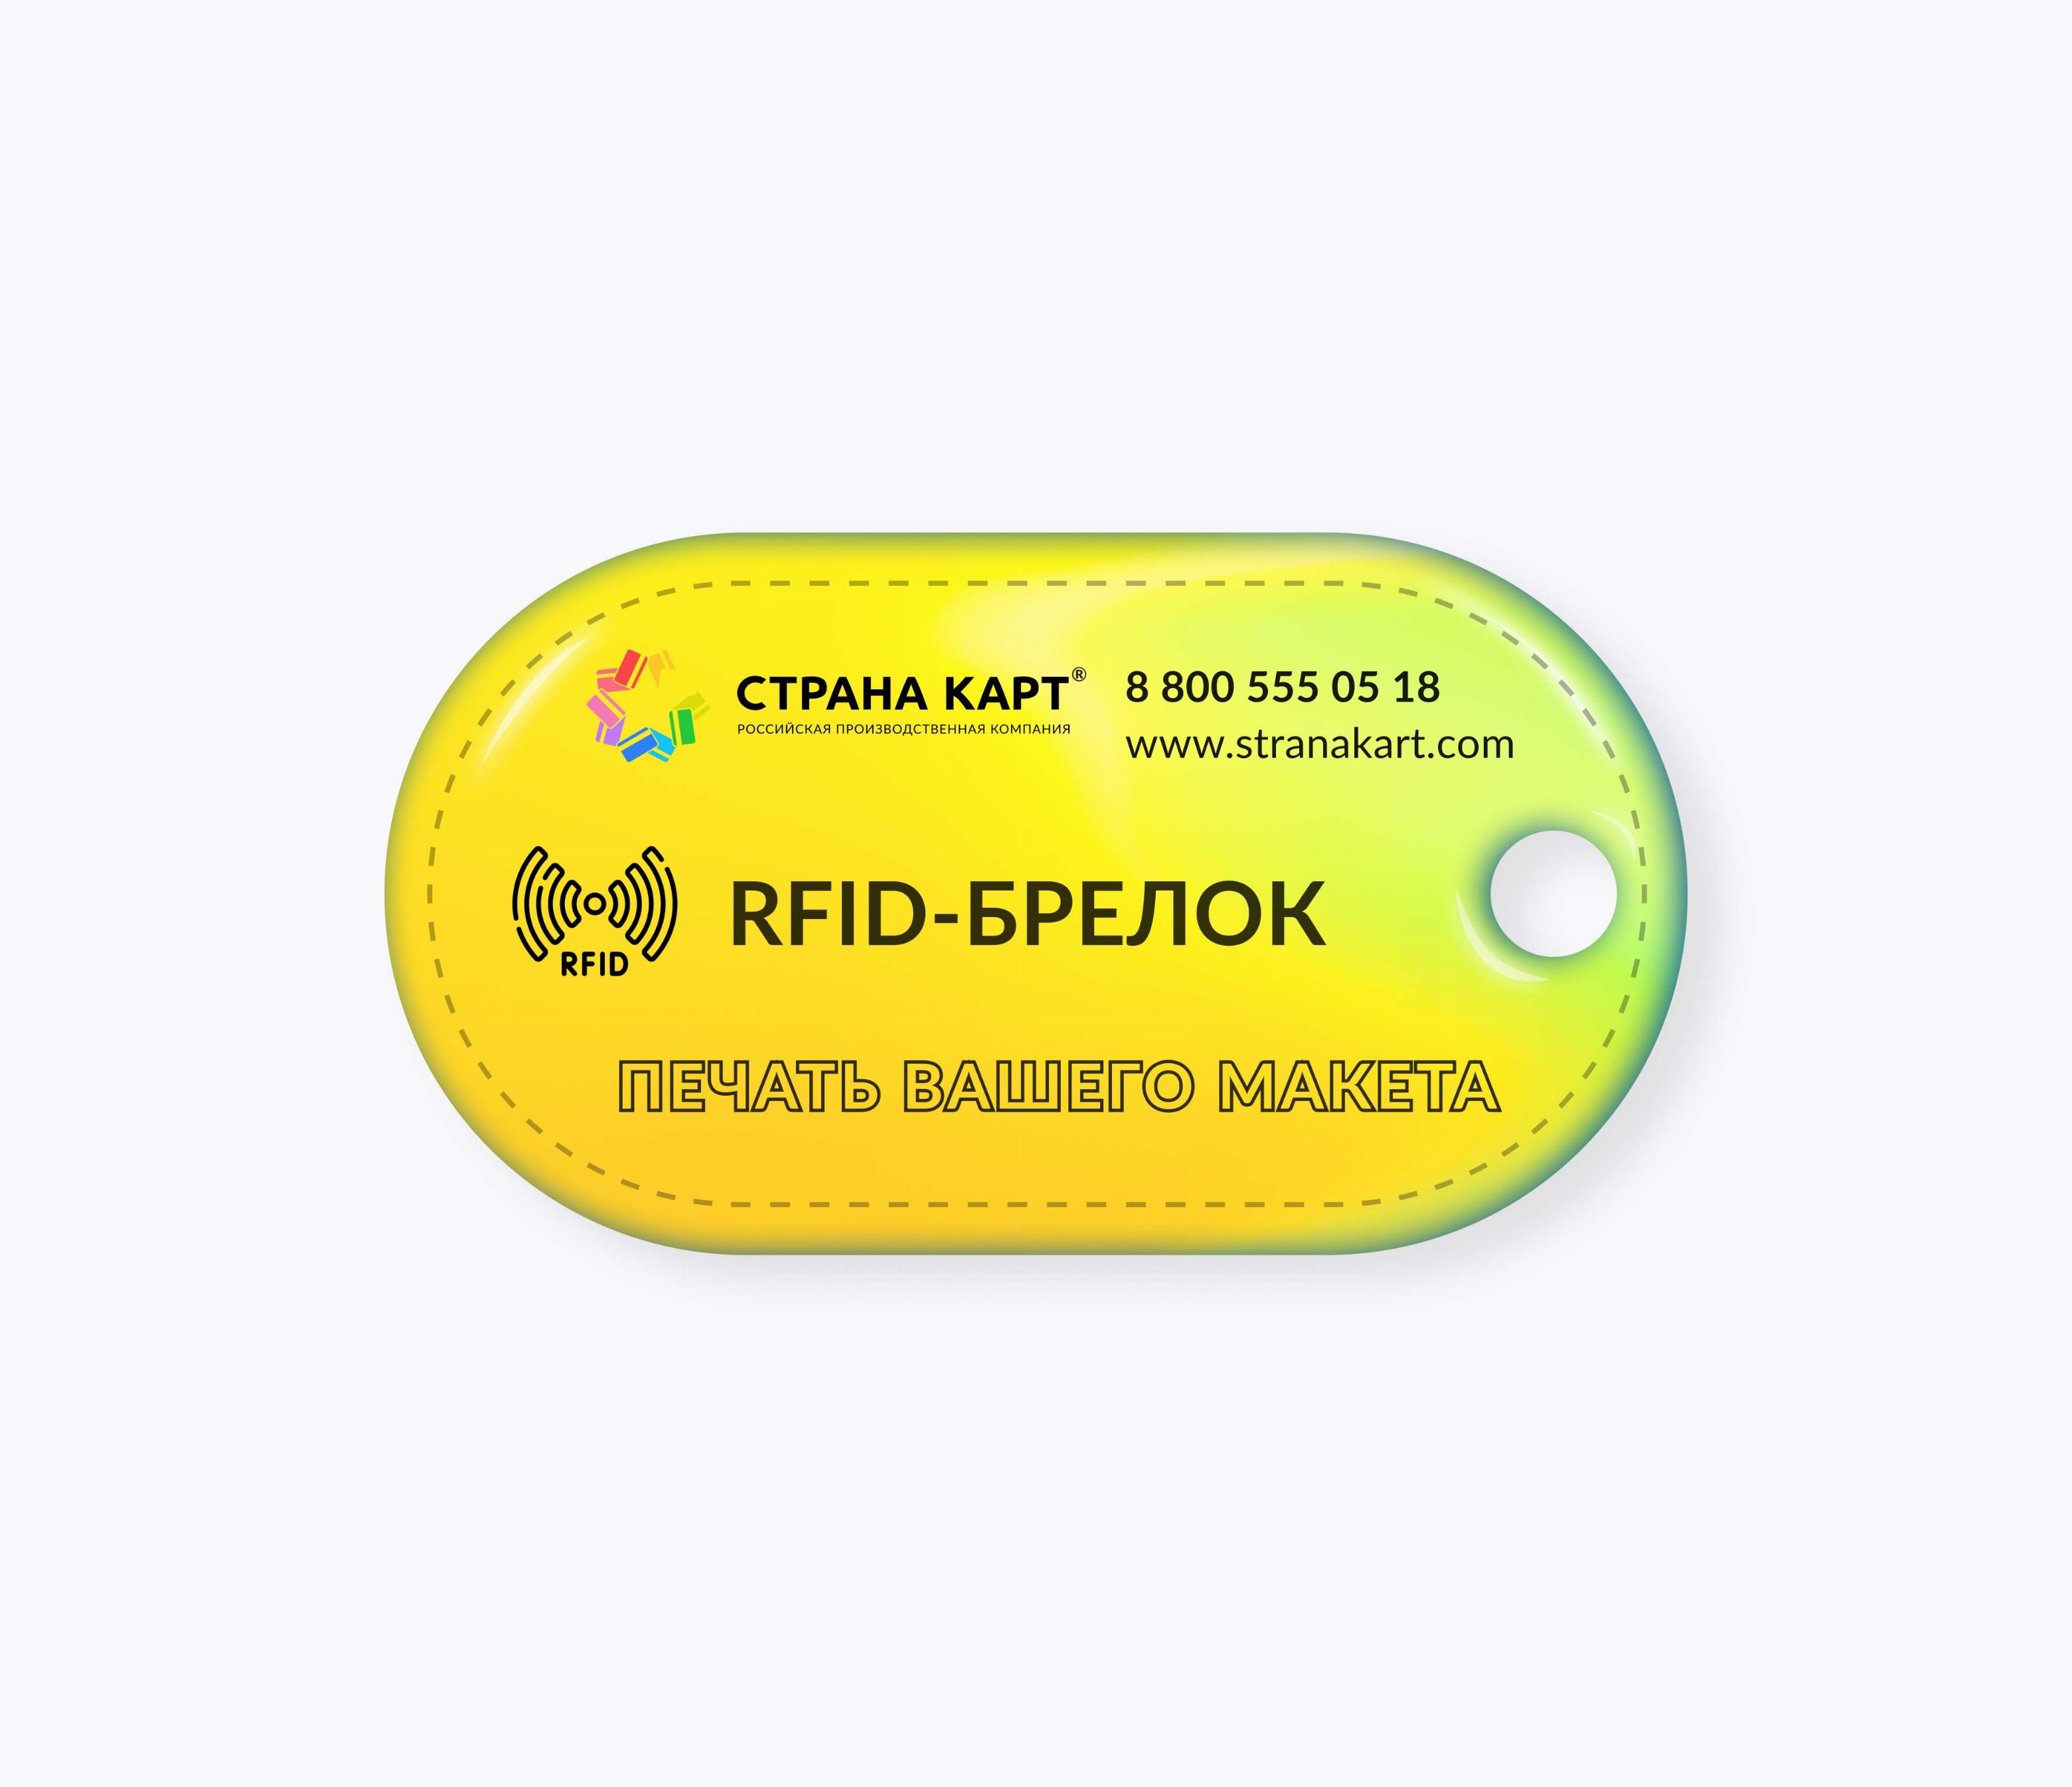 Овальные RFID-брелоки NEOKEY® с чипом SMARTTAG 1k 4 byte nUID RFID-брелоки NEOKEY® с чипом SMARTTAG 1k 4 byte nUID и вашим логотипом